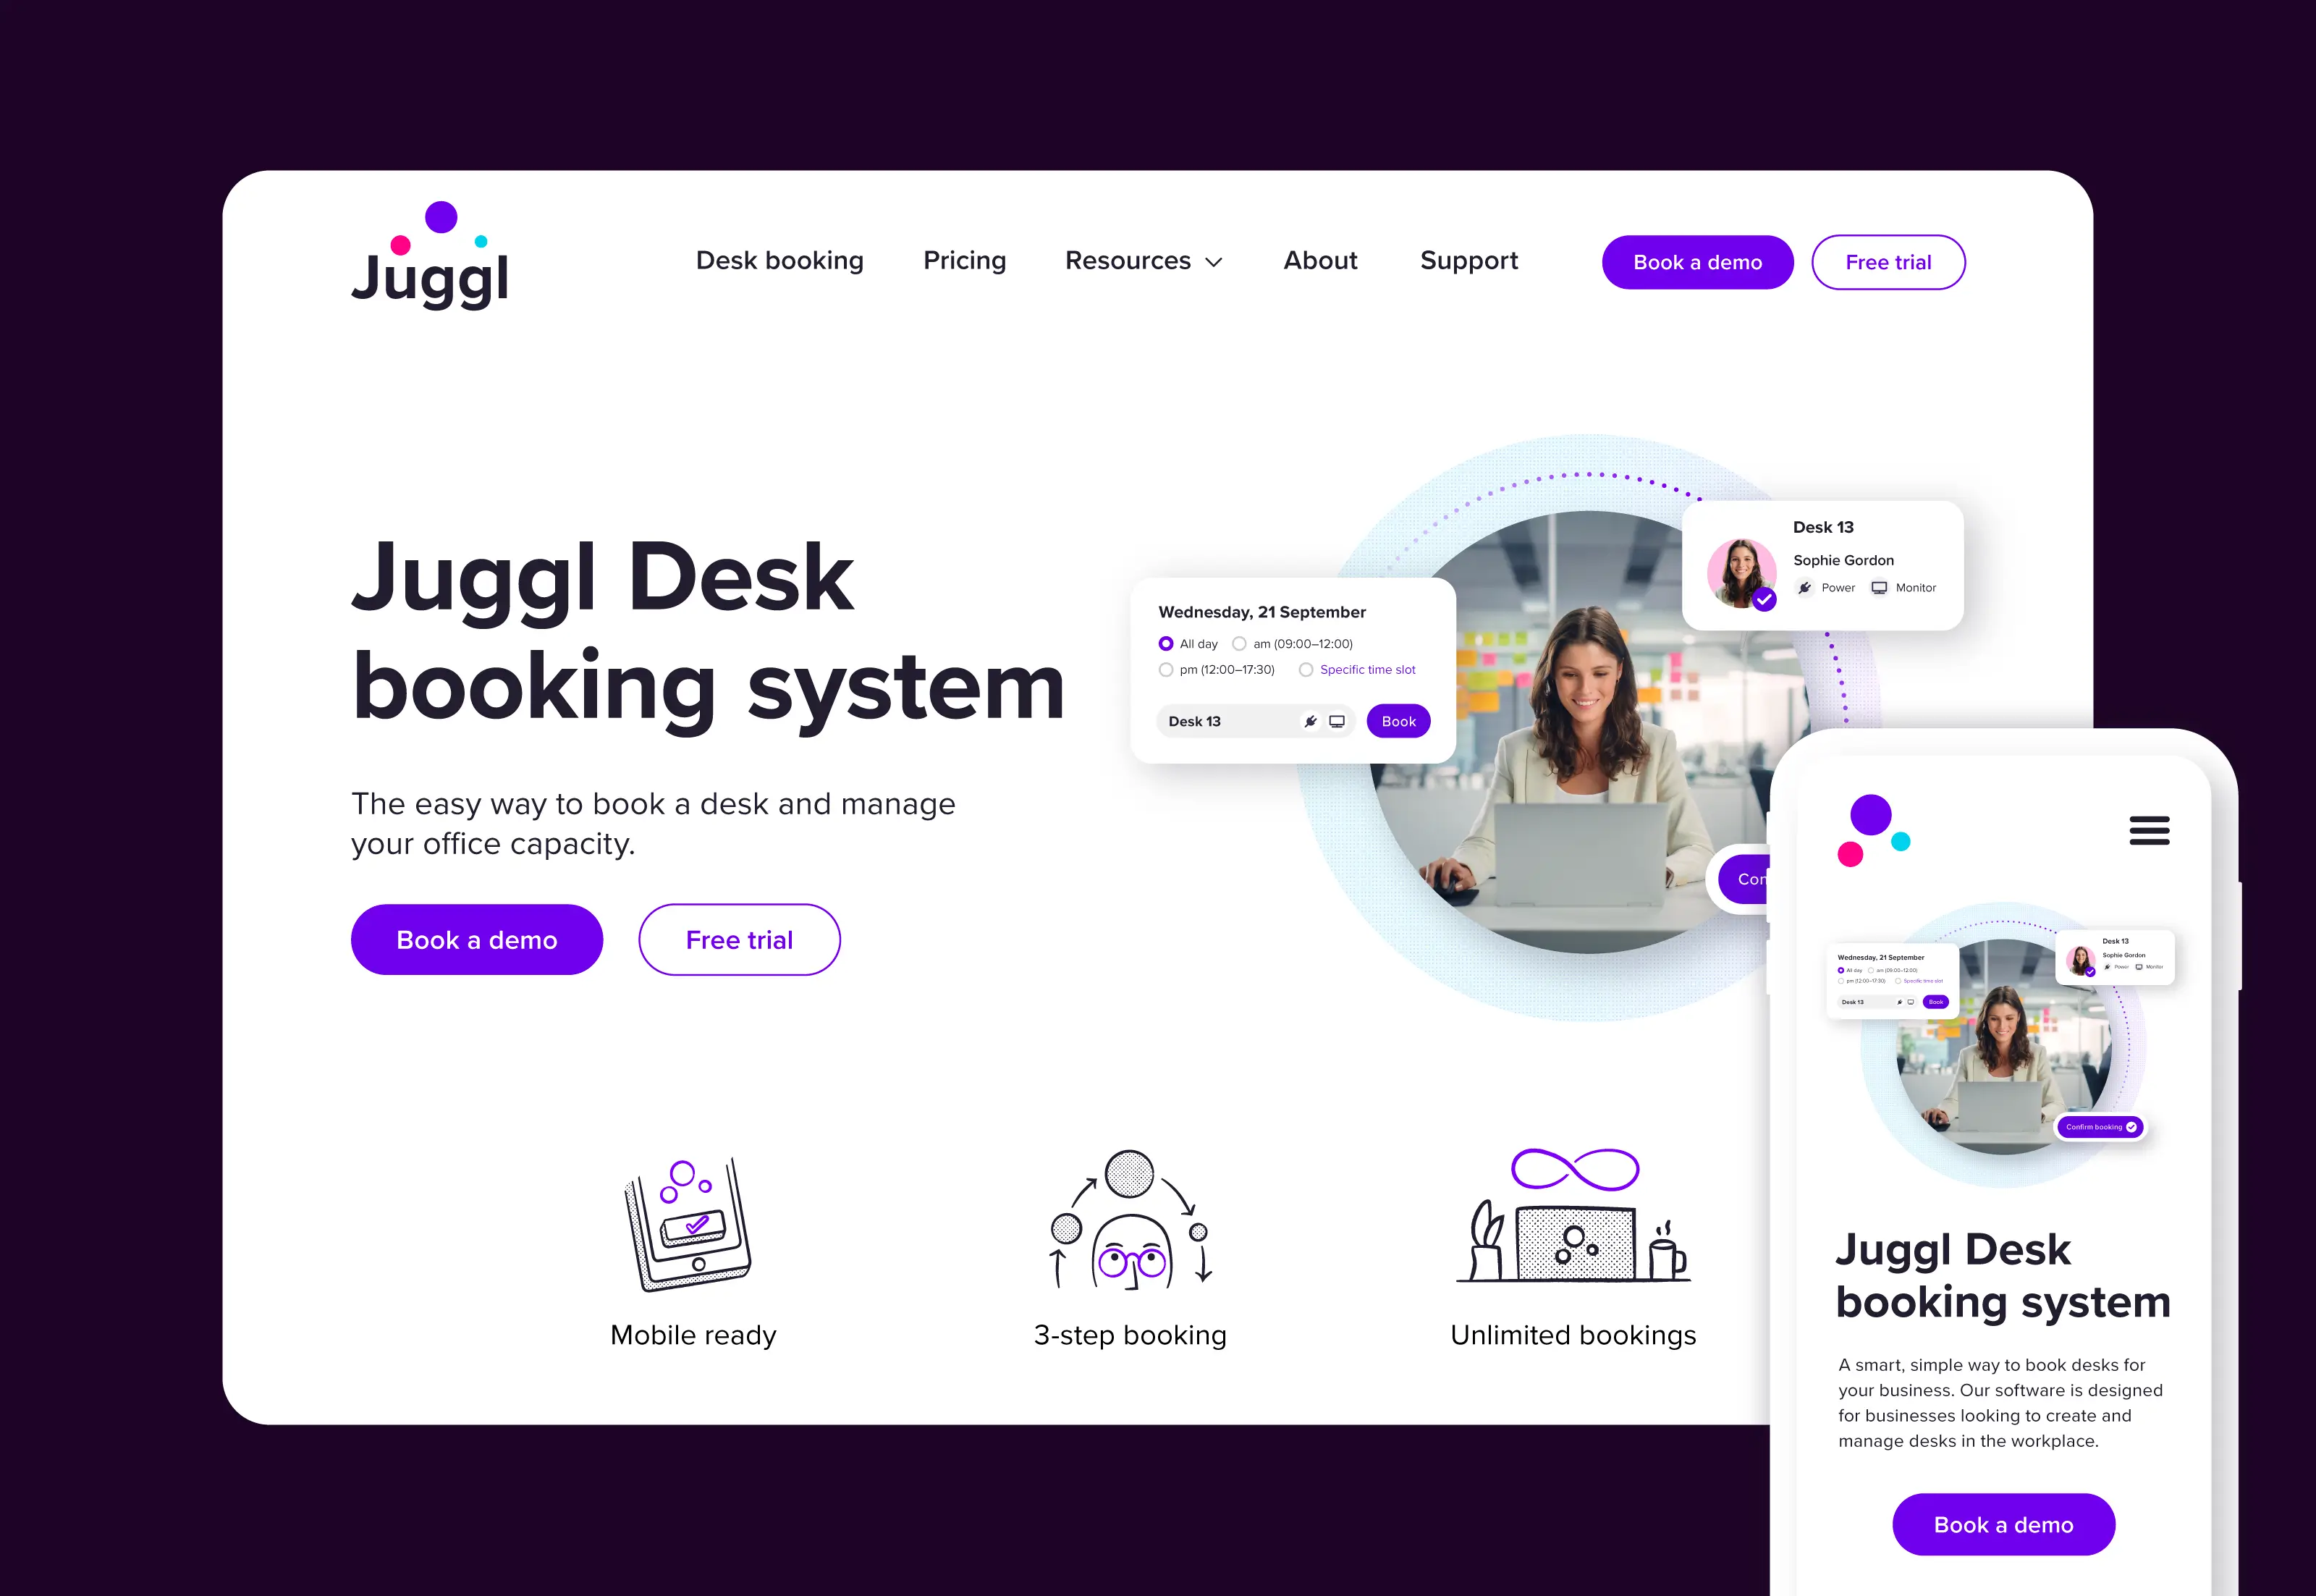 Juggl Website On Laptop And Mobile